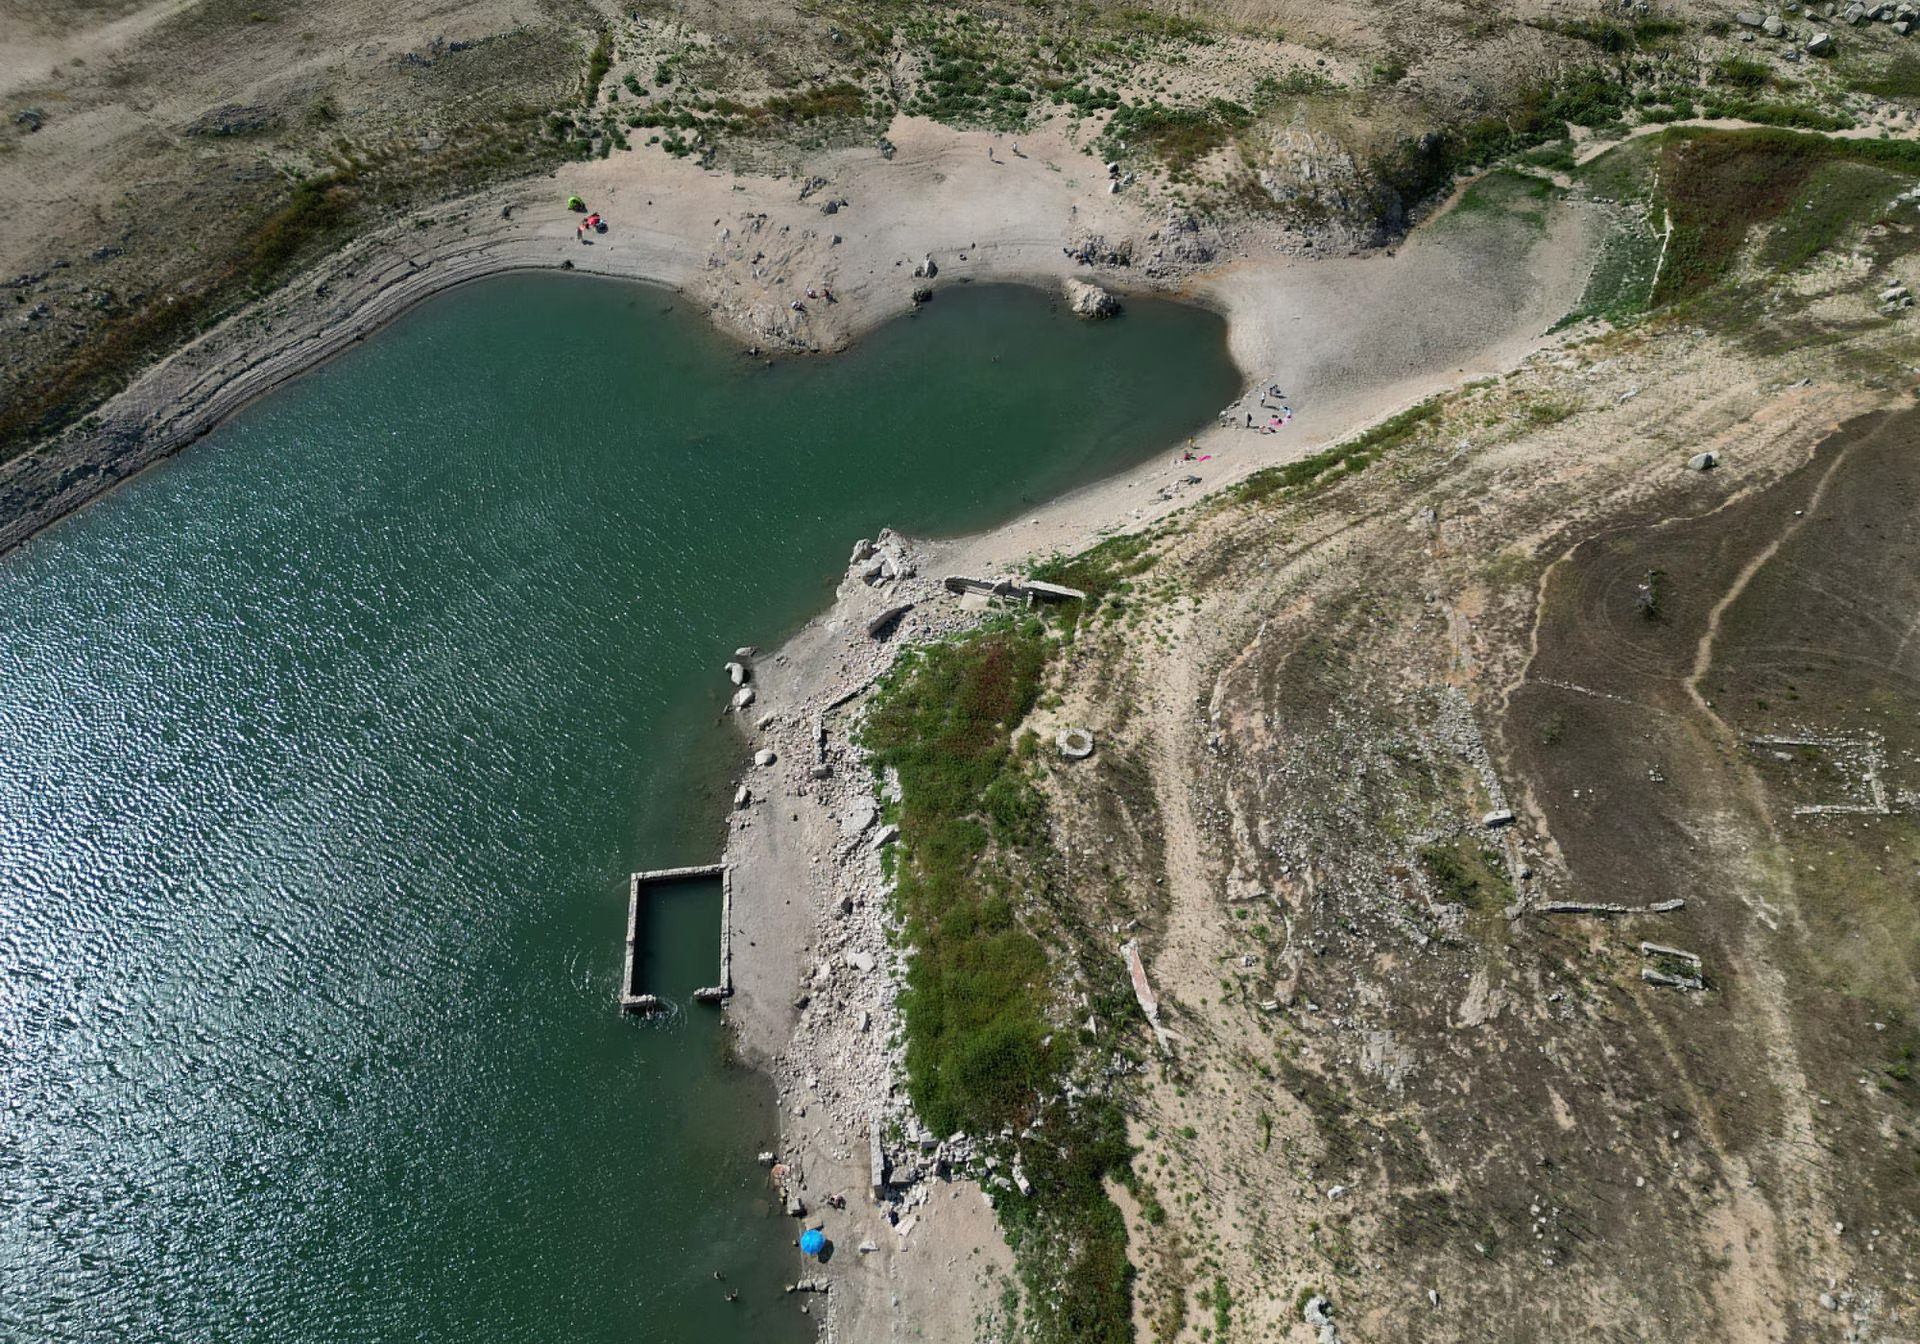 Drought's grip: Spain's Darnius Boadella reservoir stark reminder of escalating water crisis 